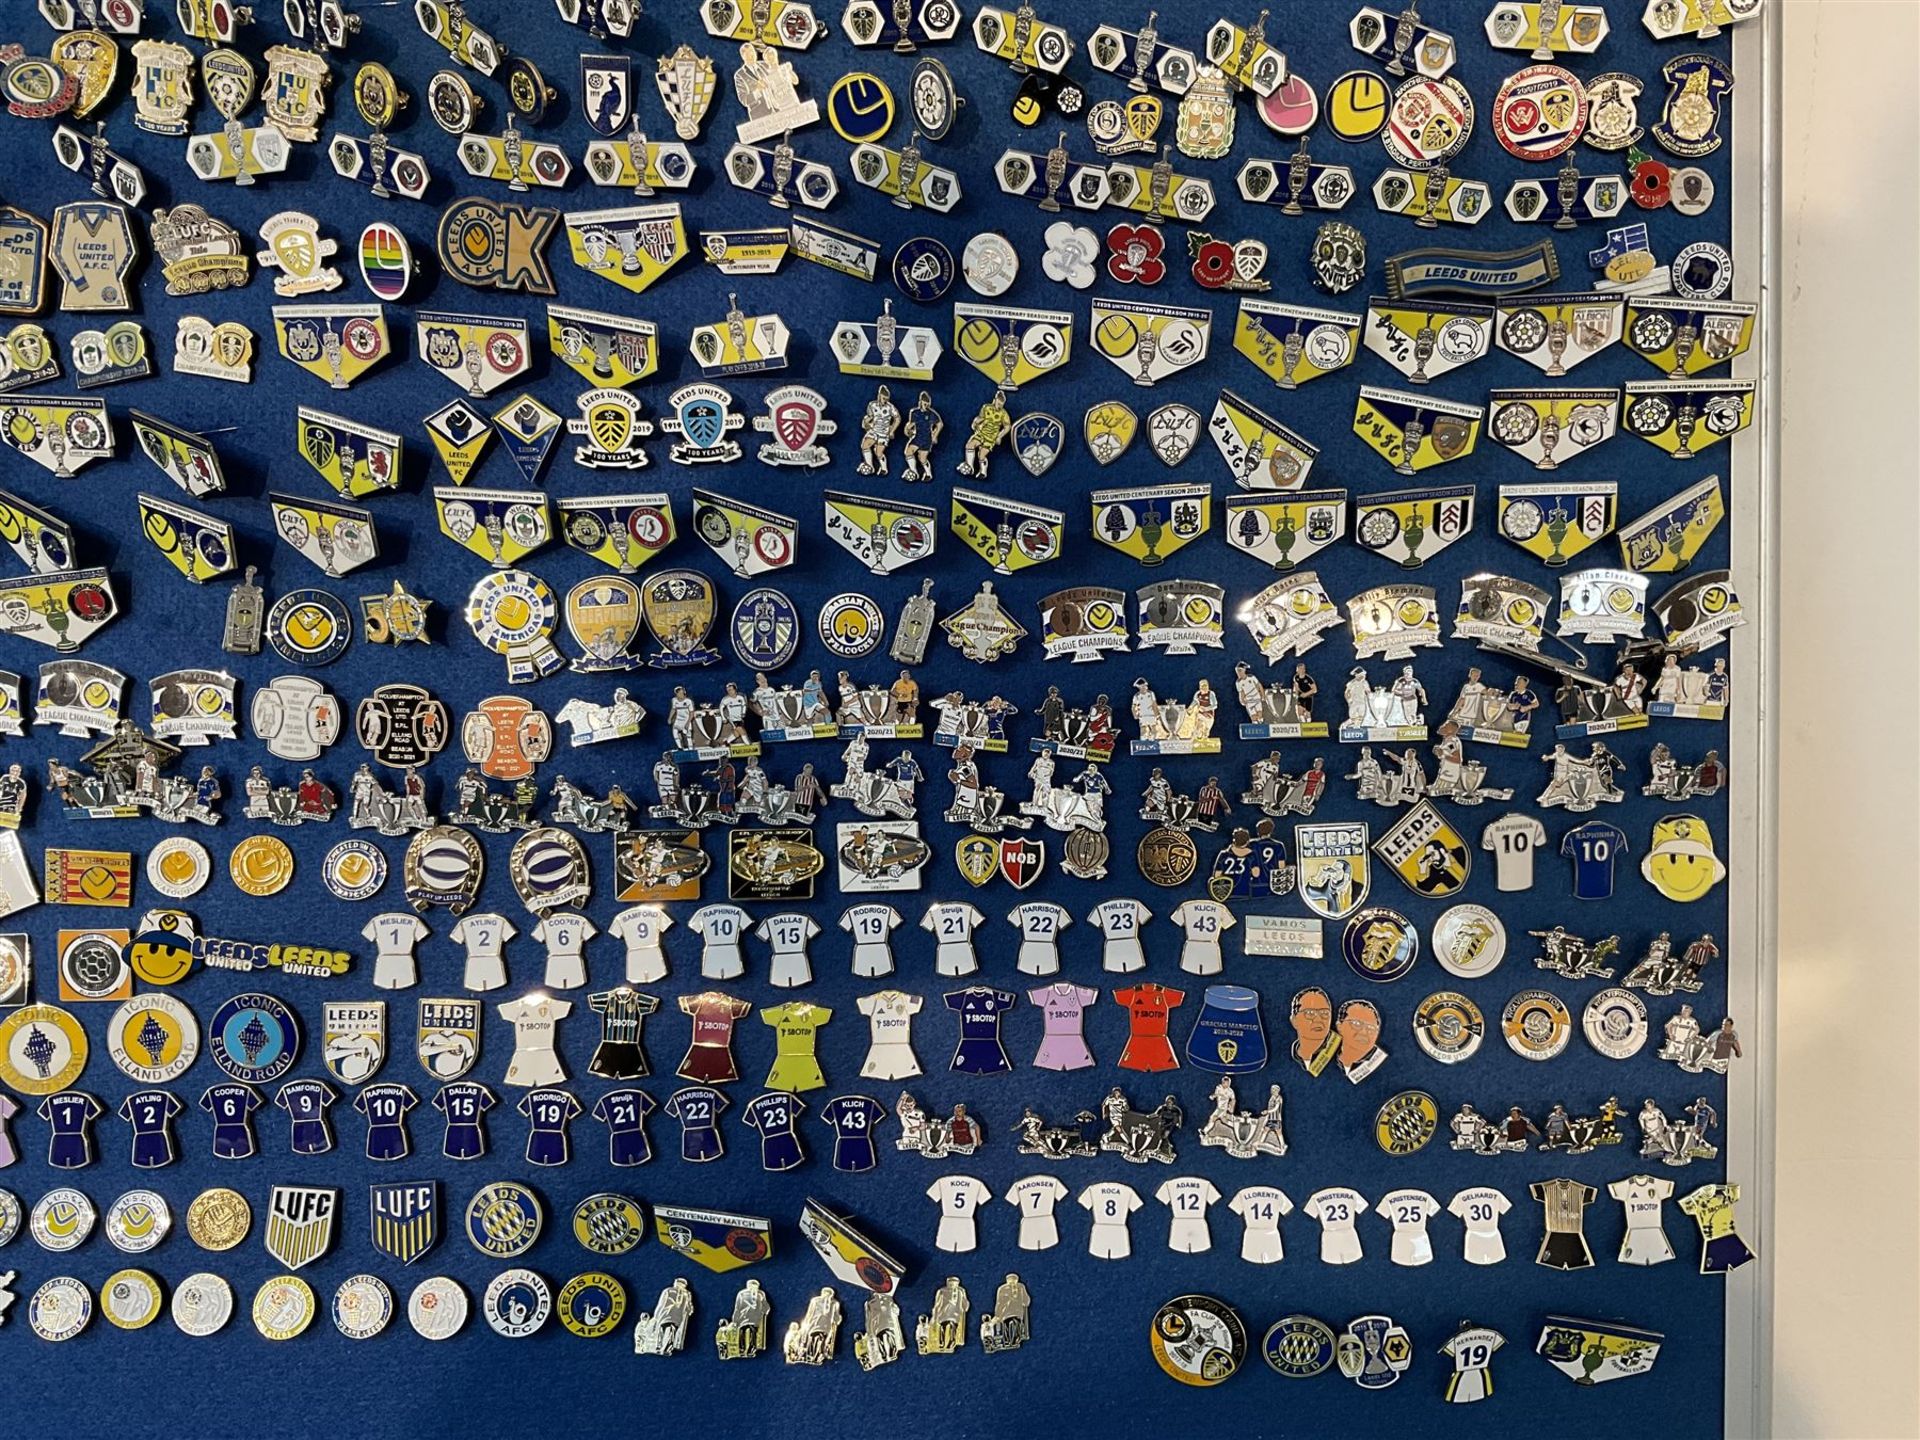 Leeds United football club - approximately six-hundred pin badges including player badges (Bamford - Image 5 of 7